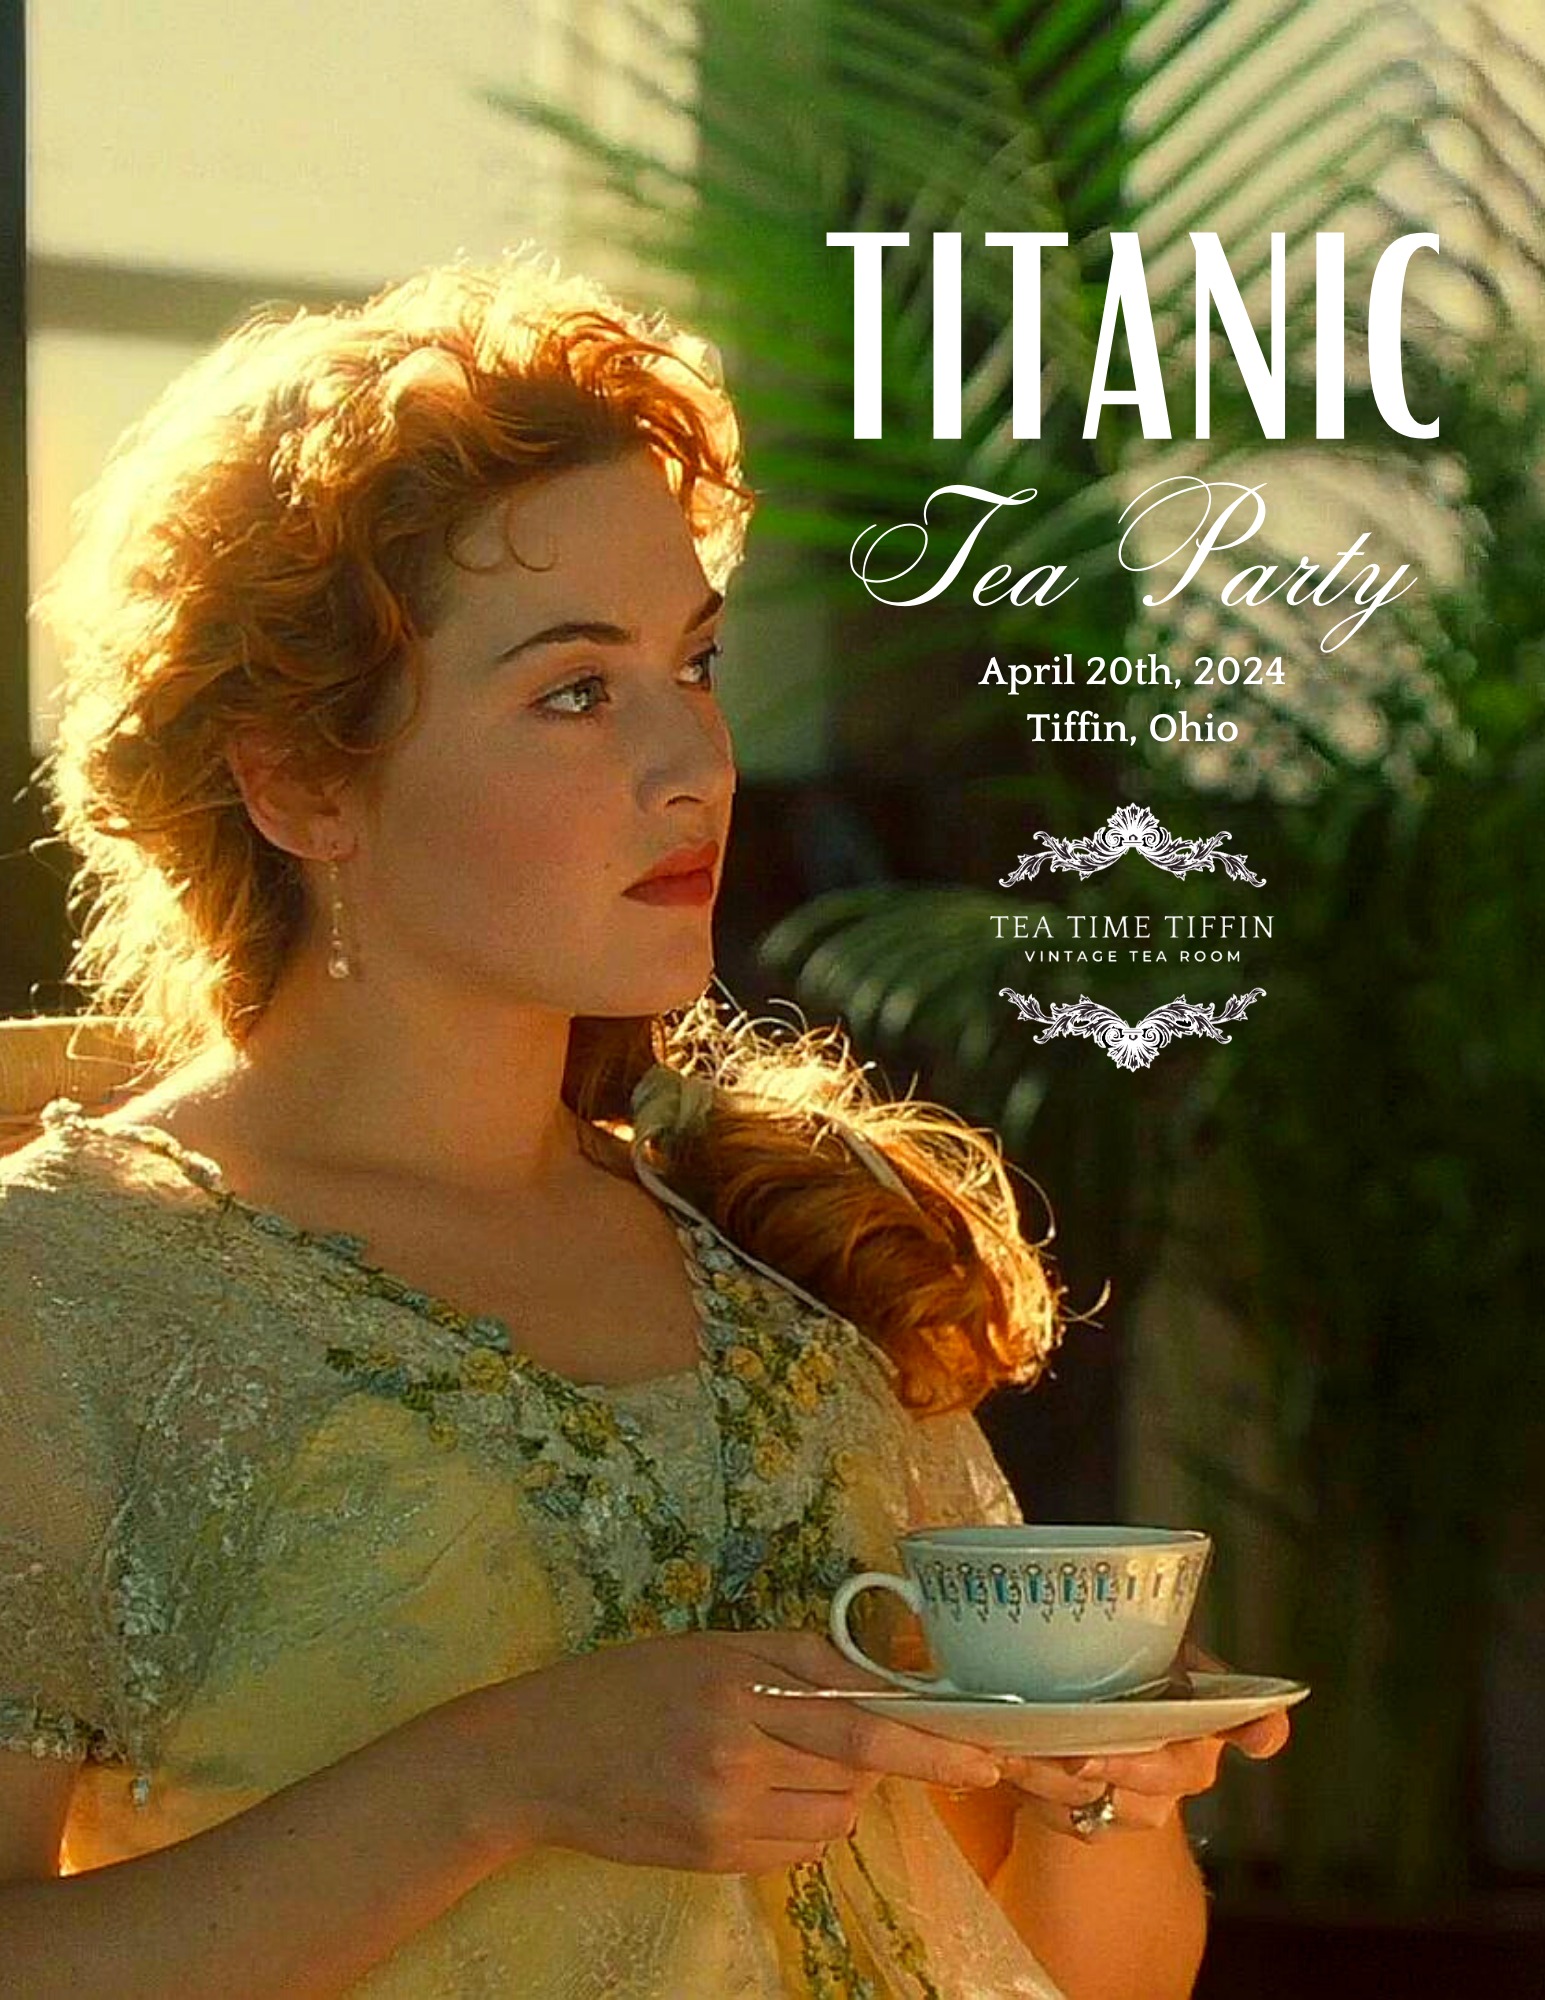 Titanic Tea Party